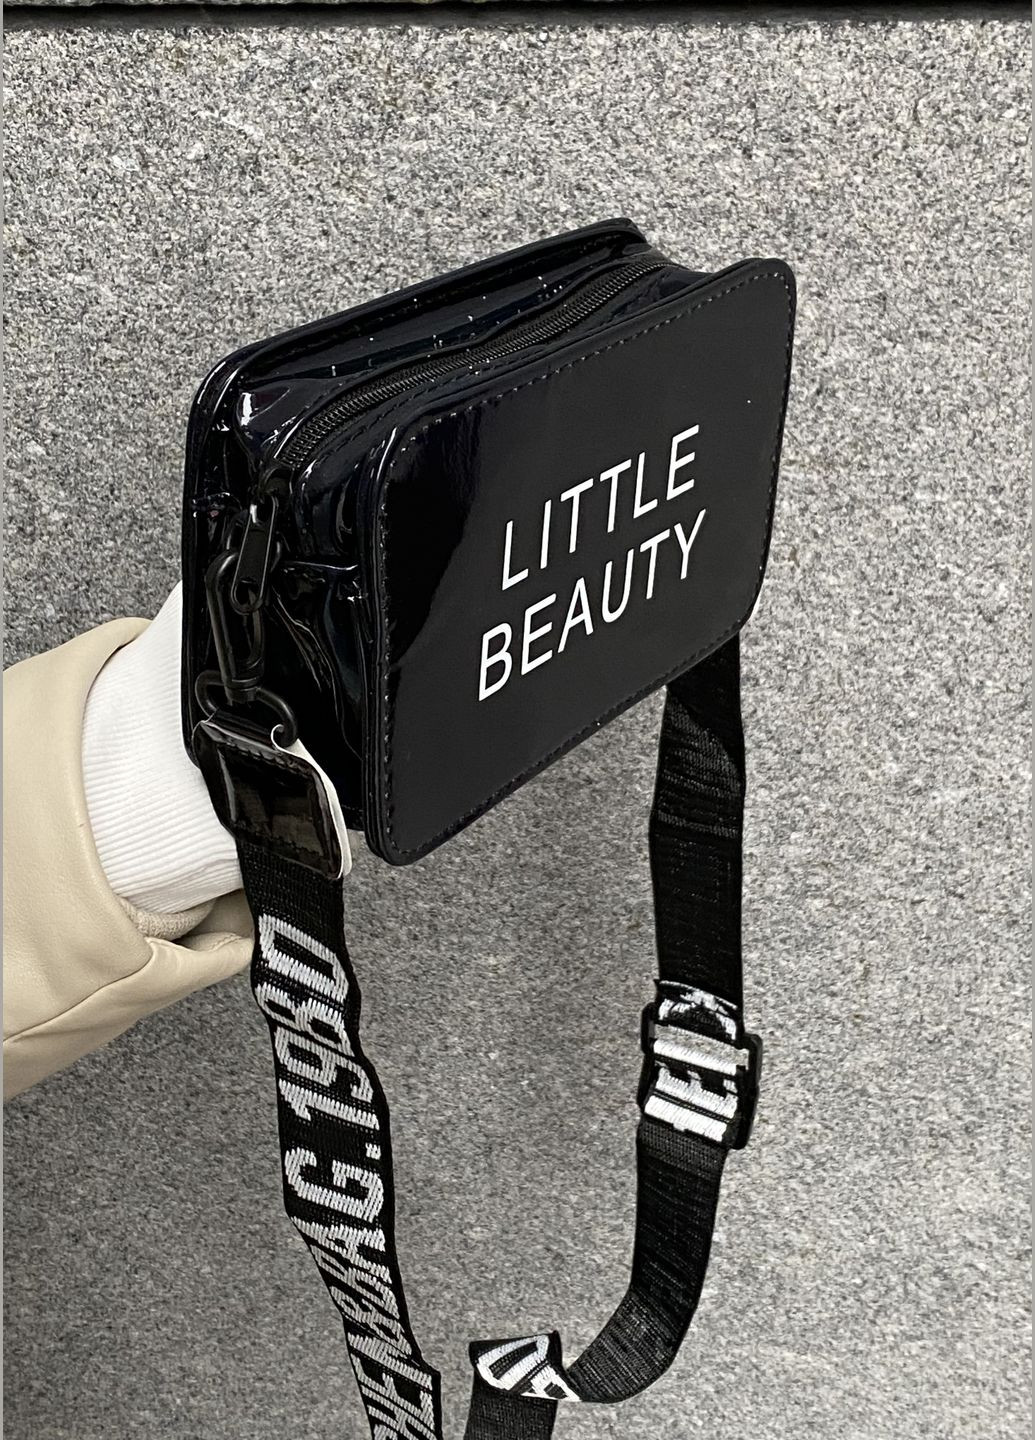 Жіноча дитяча голографічна сумка крос-боді через плече LITTLE BEAUTY чорна No Brand (285794903)